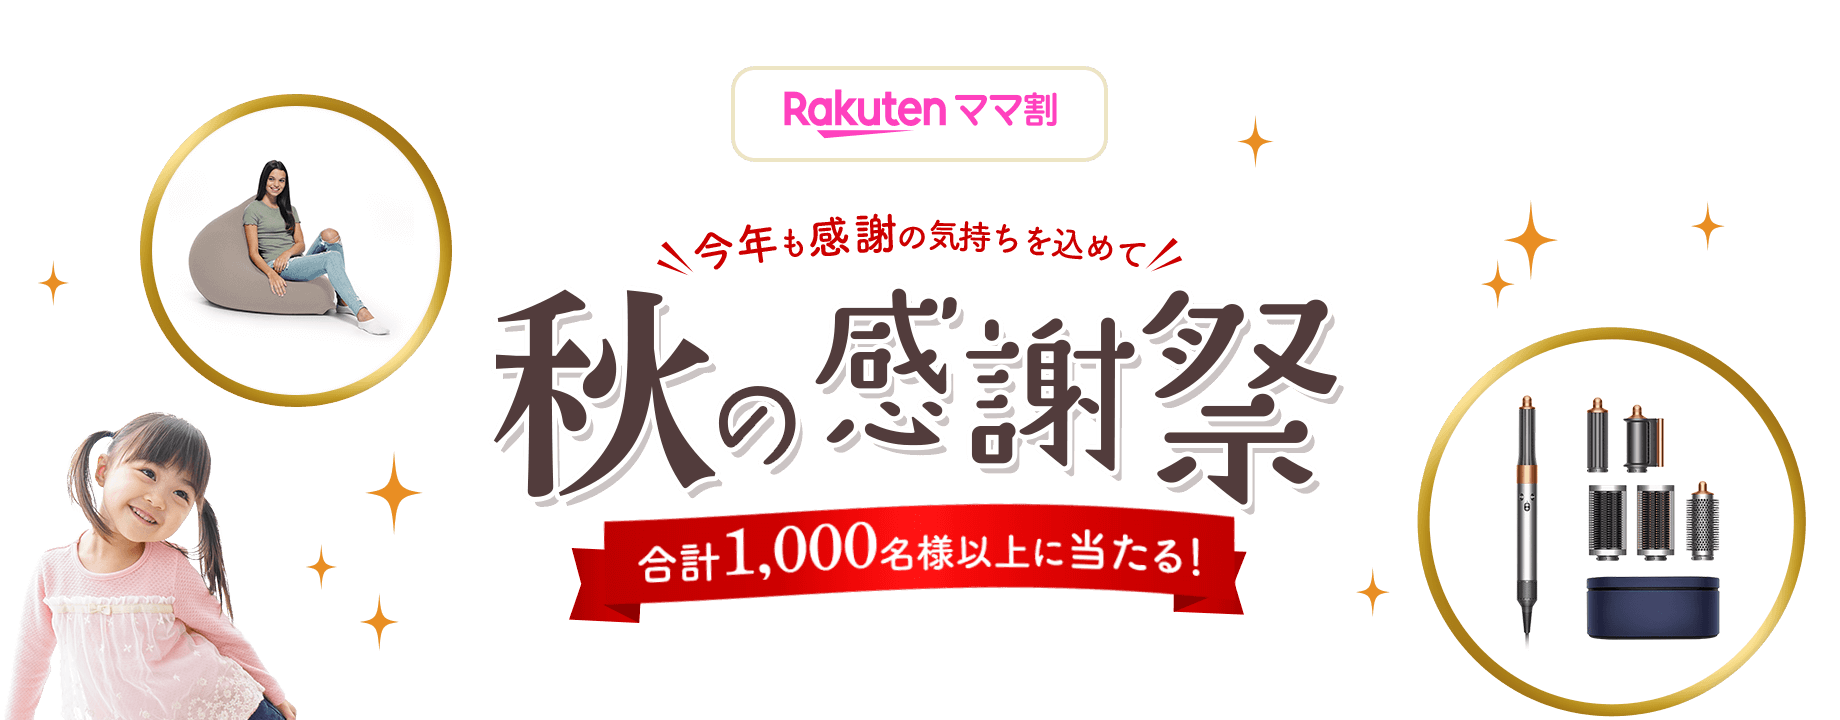 Rakuten ママ割 今年も感謝の気持ちを込めて 秋の感謝祭 合計1,000名様以上に当たる！